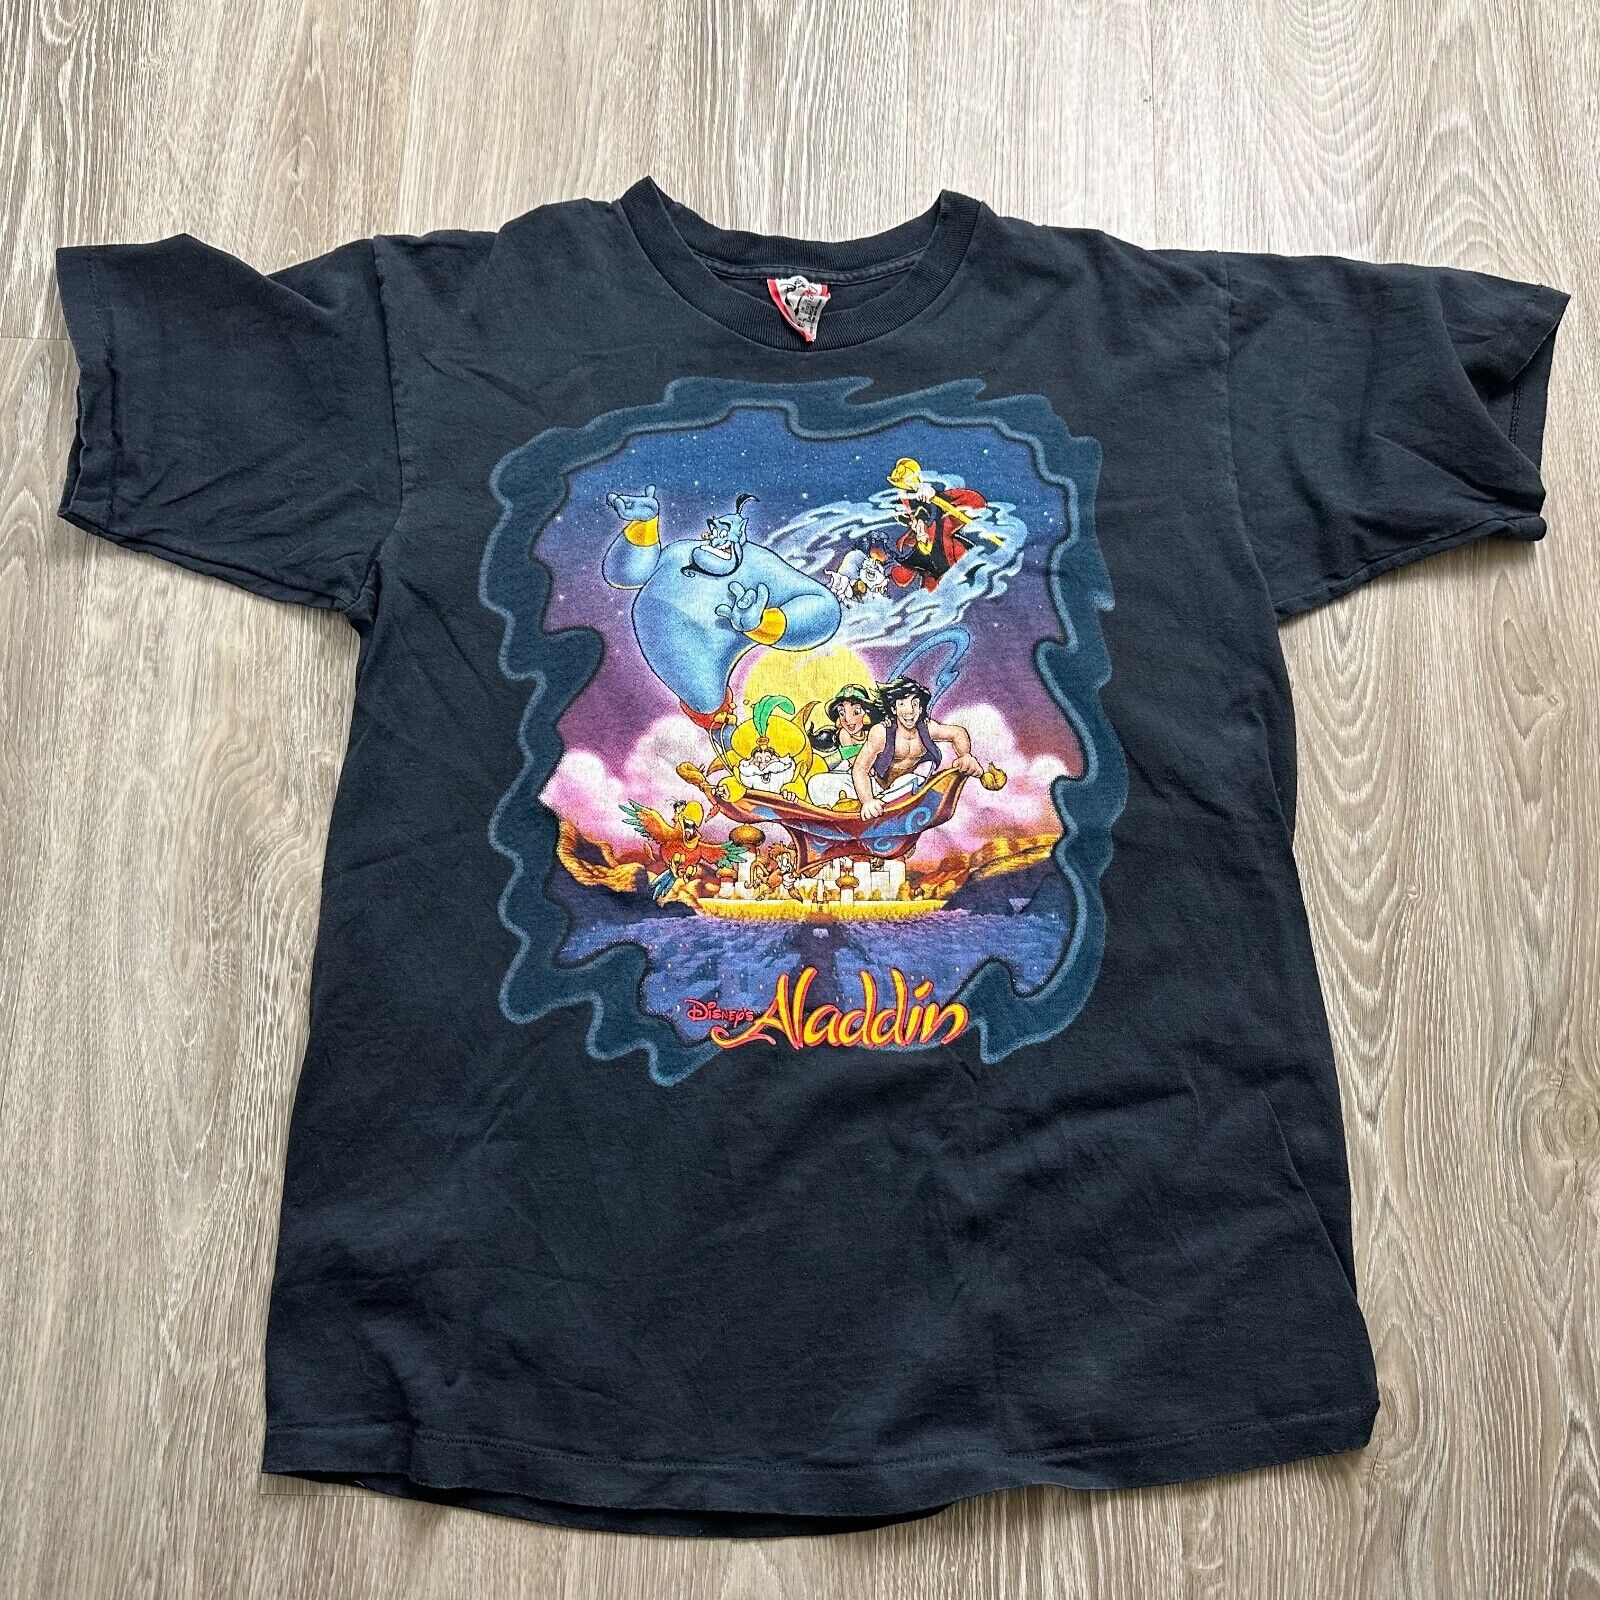 Disney Aladdin Vintage Graphic Black T-Shirt Genie Jasmine Jafar Abu Iago Mens L